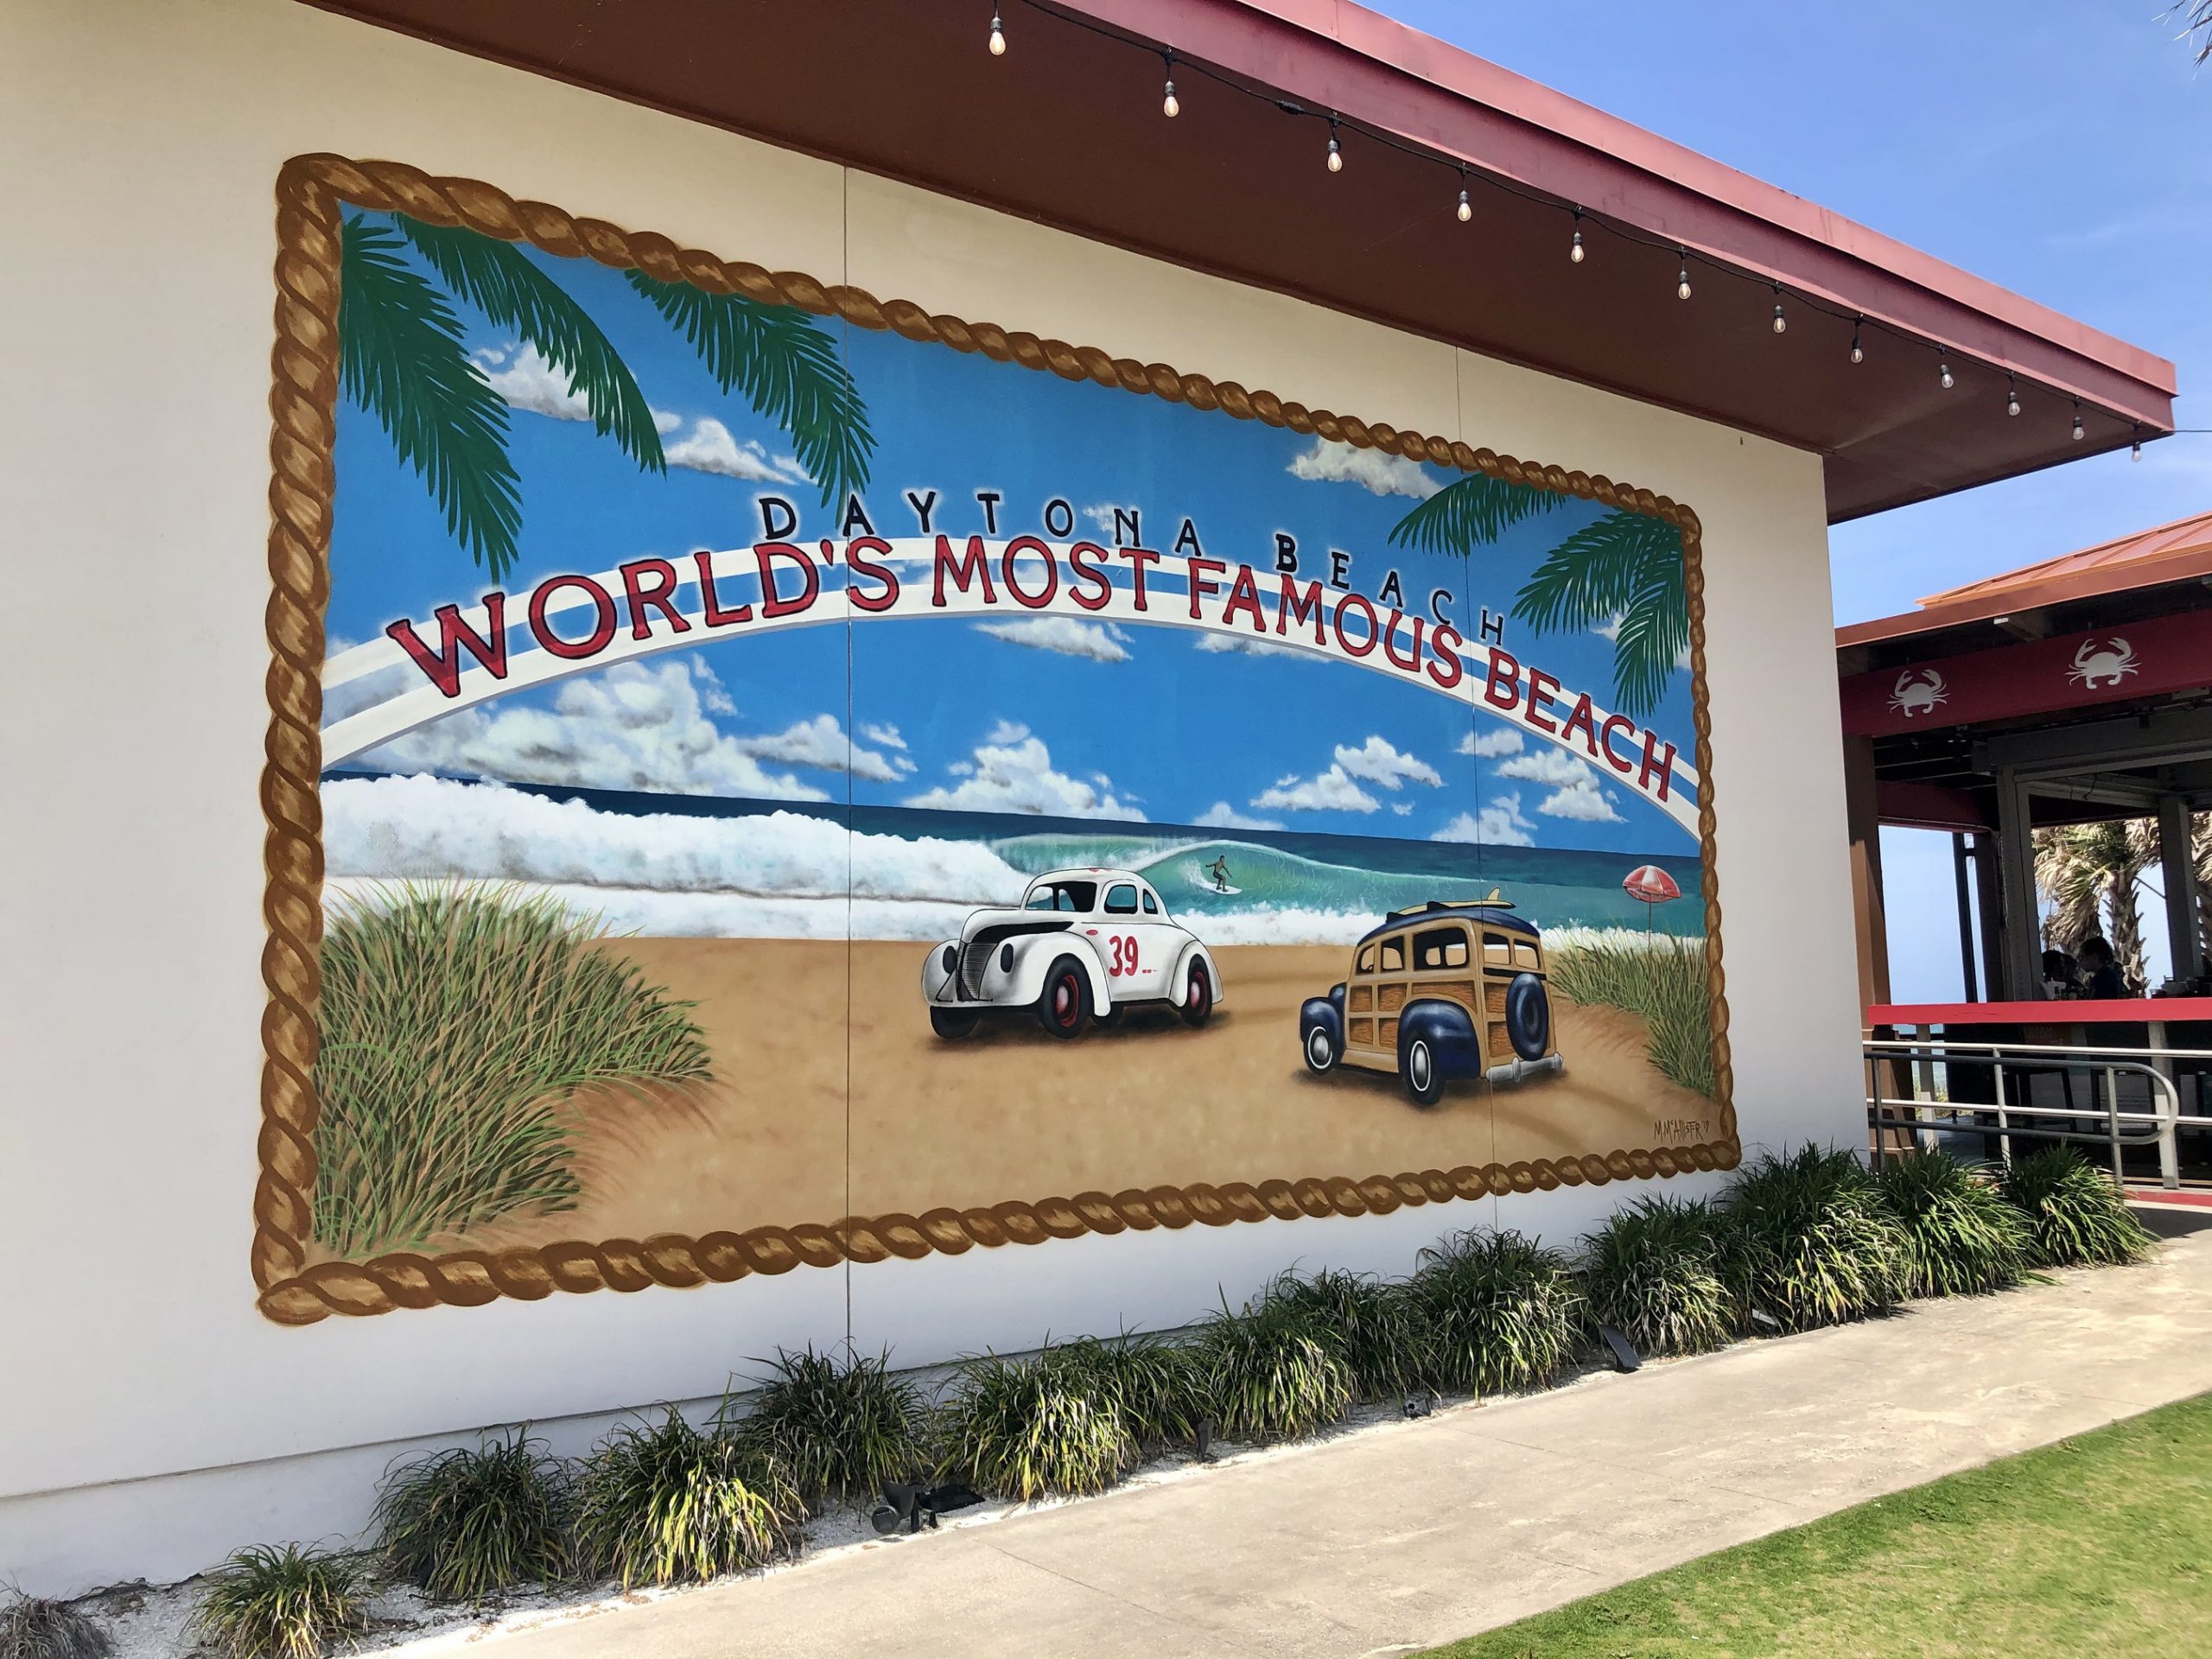 Art lovers will love the new Daytona Beach mural trail